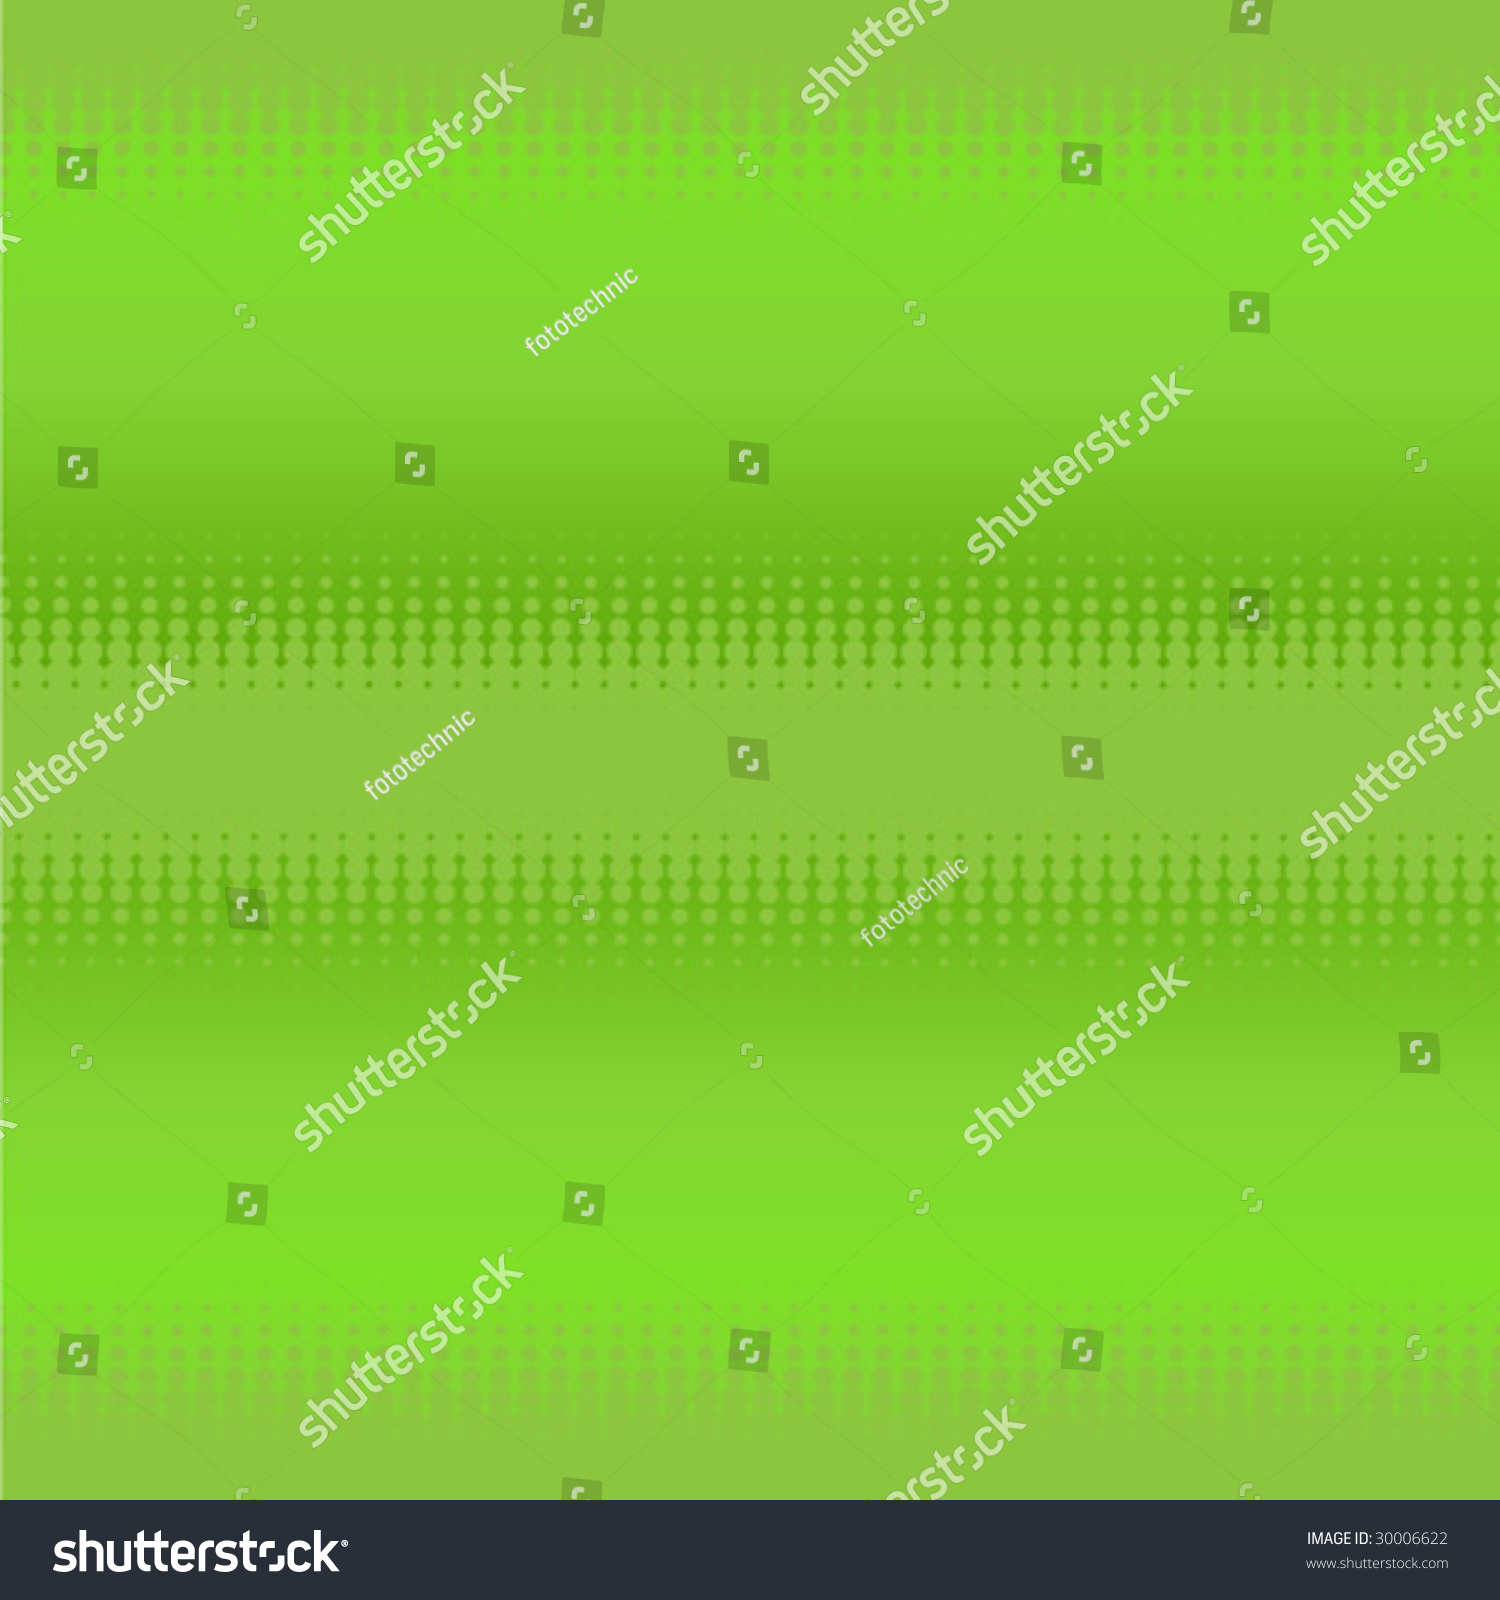 Half-Tone Background. Vector Illustration - 30006622 : Shutterstock